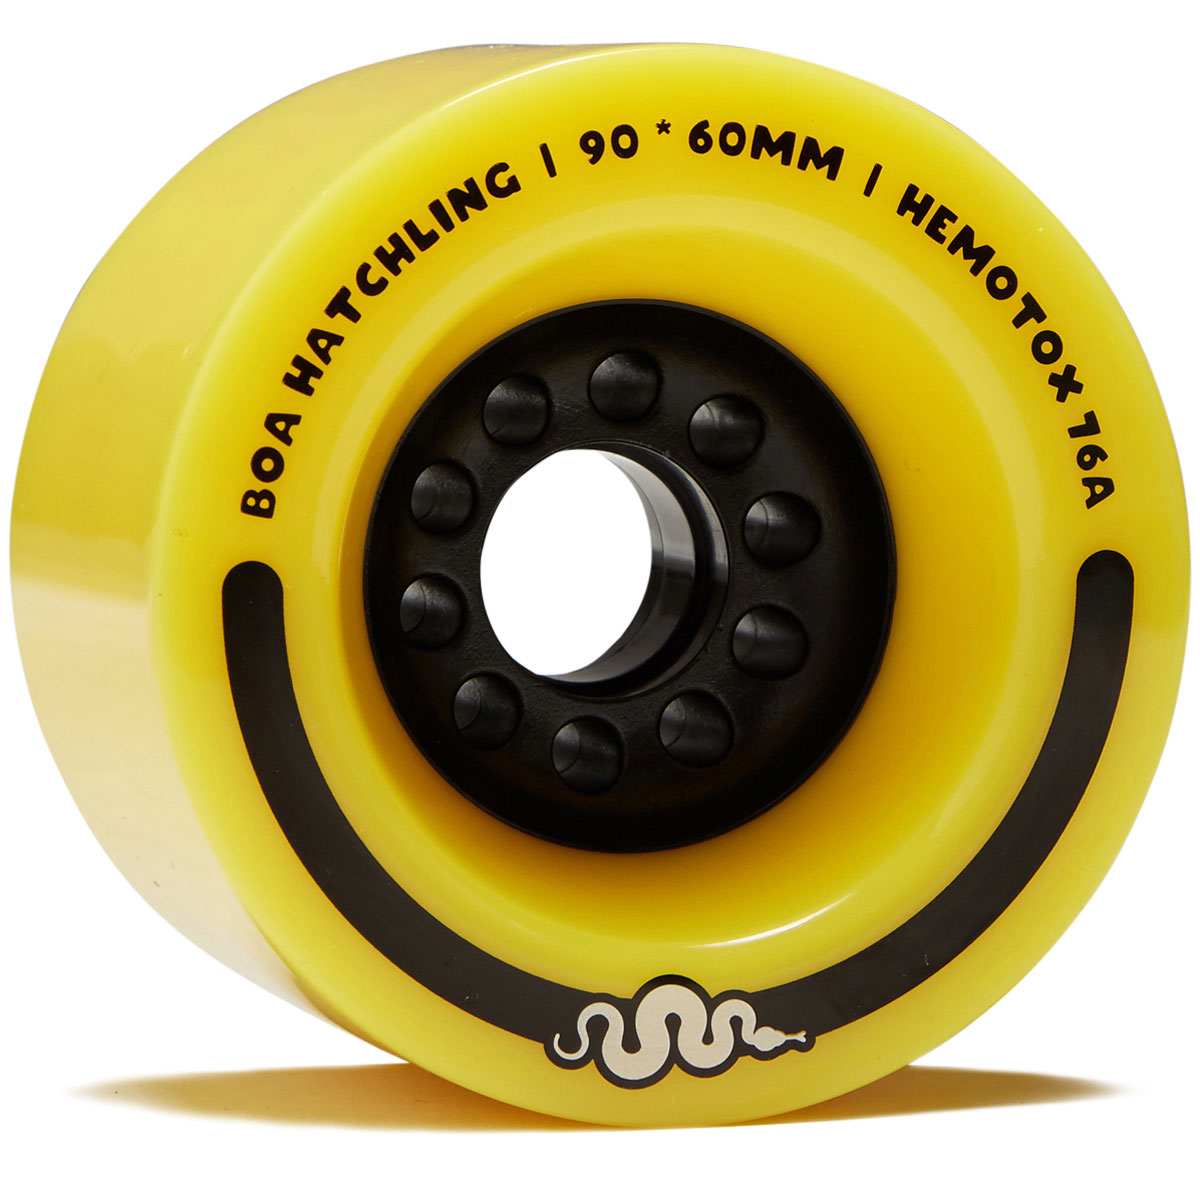 Boa Hatchling V3 76a Longboard Wheels - Yellow - 90mm image 1